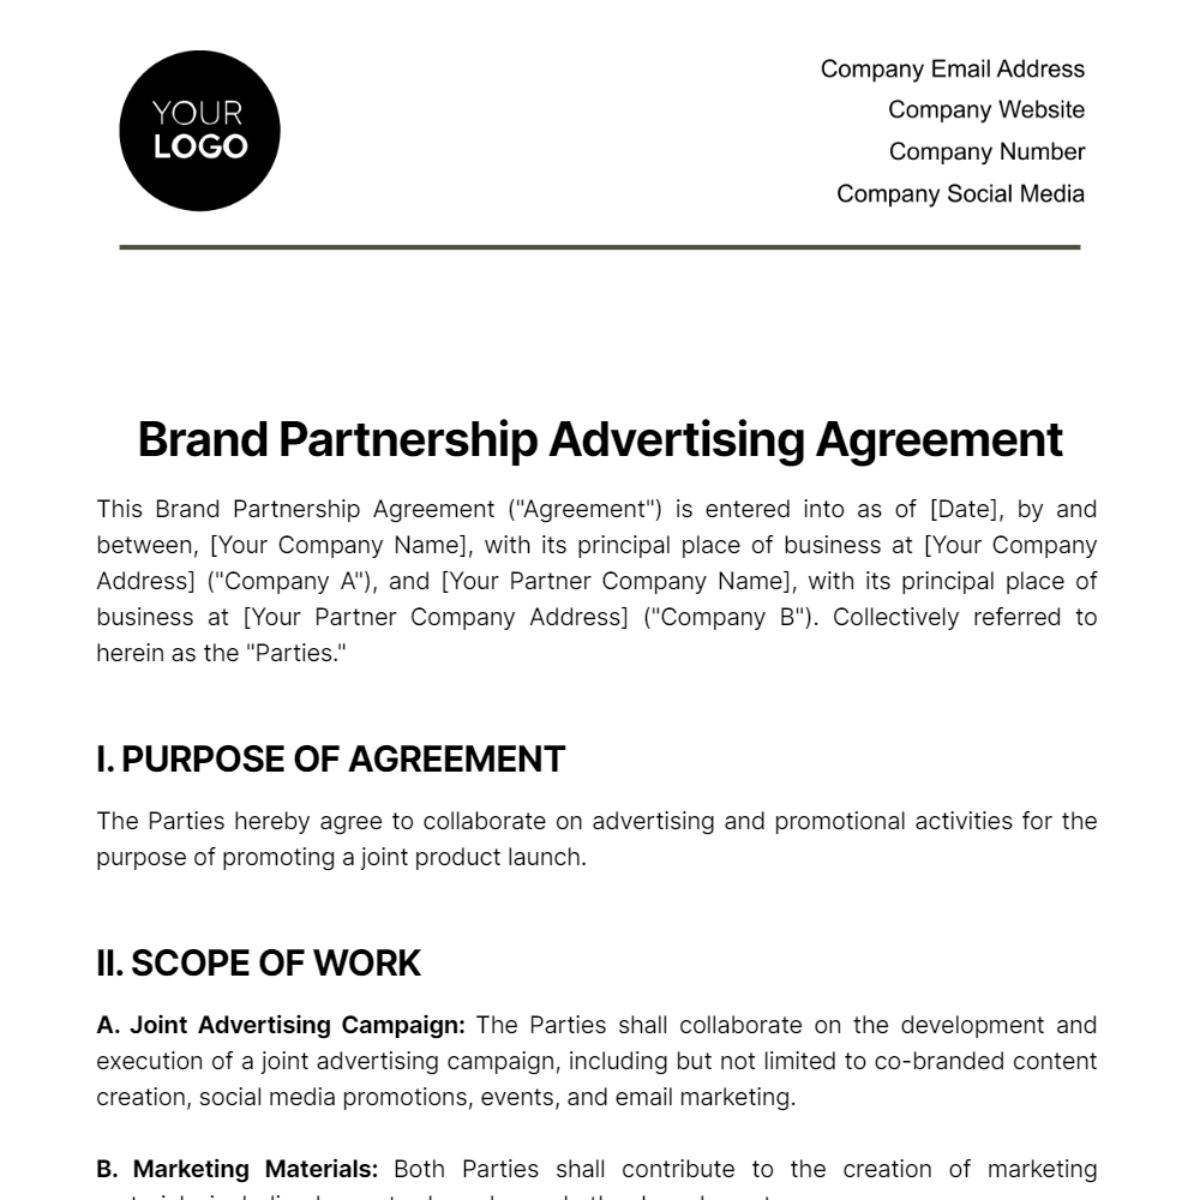 Brand Partnership Advertising Agreement Template